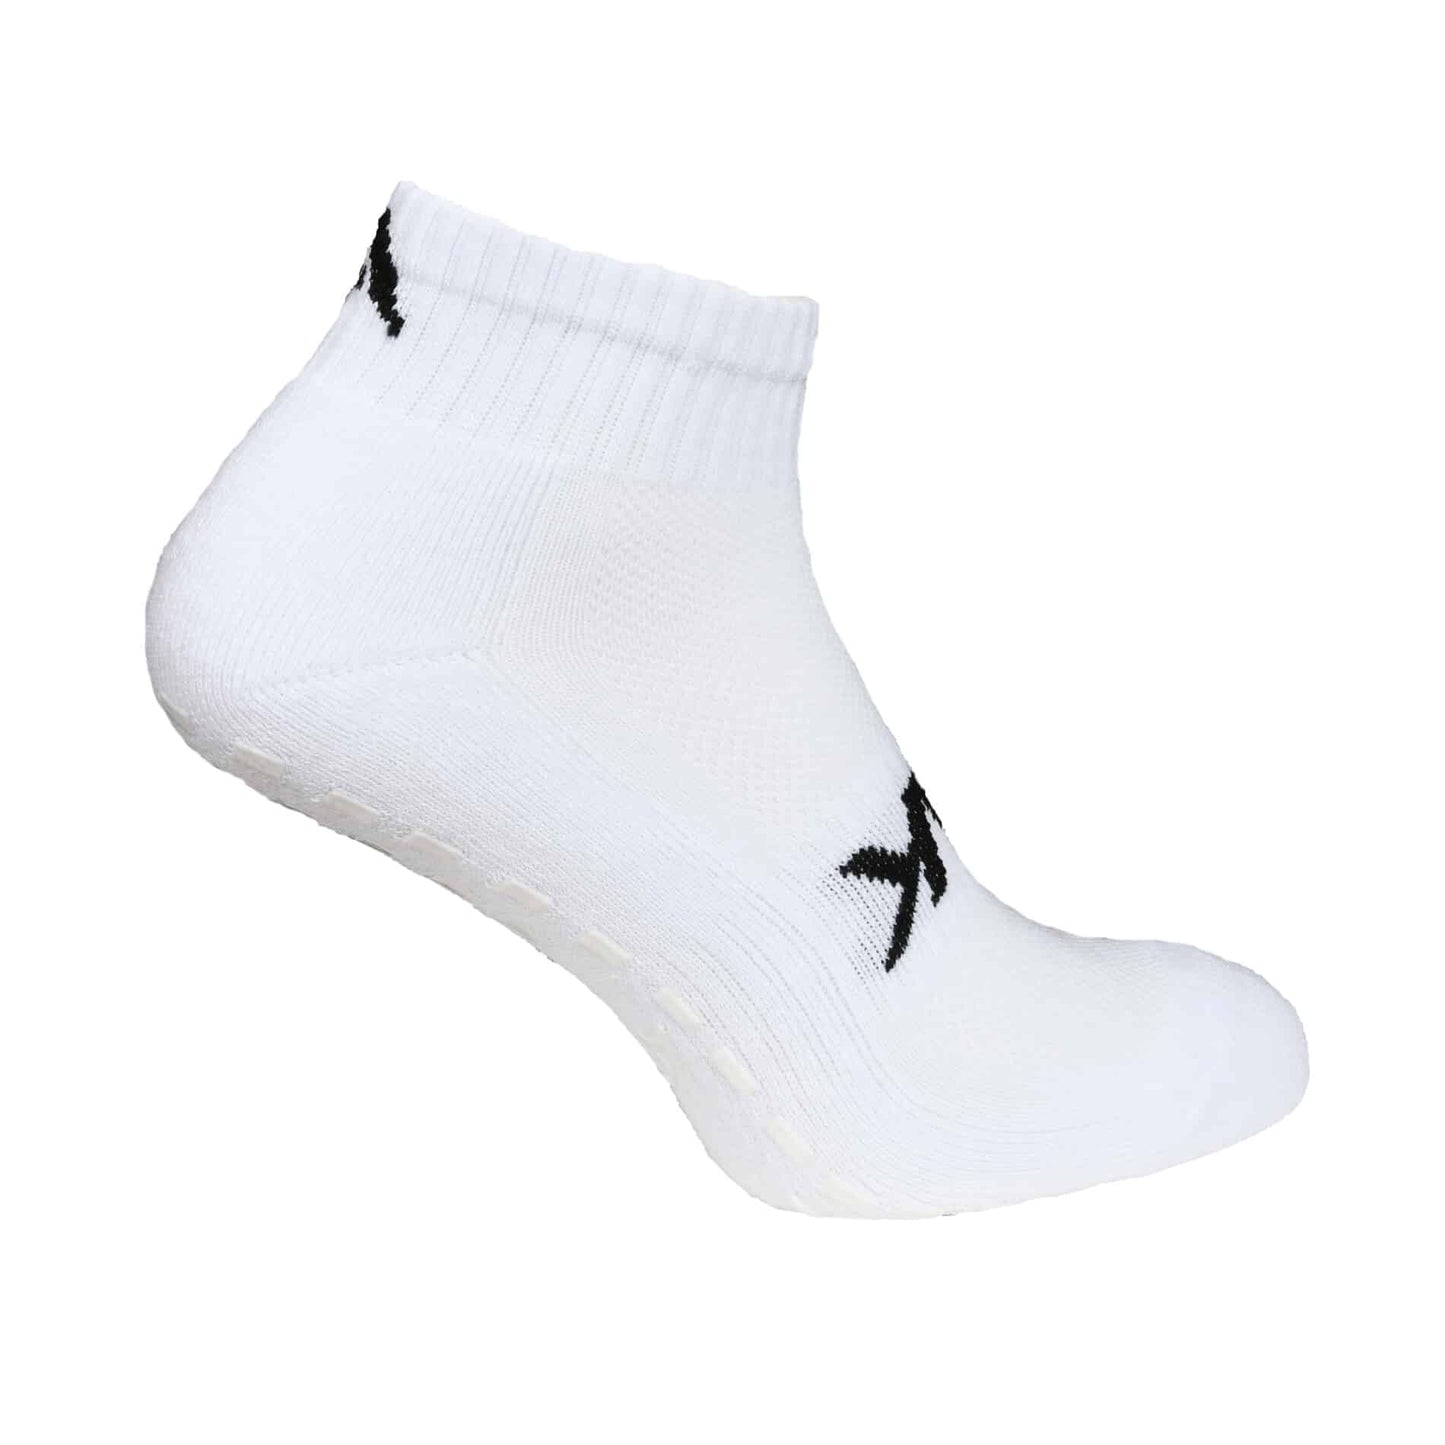 White Gripzlite Pro Quarters sock